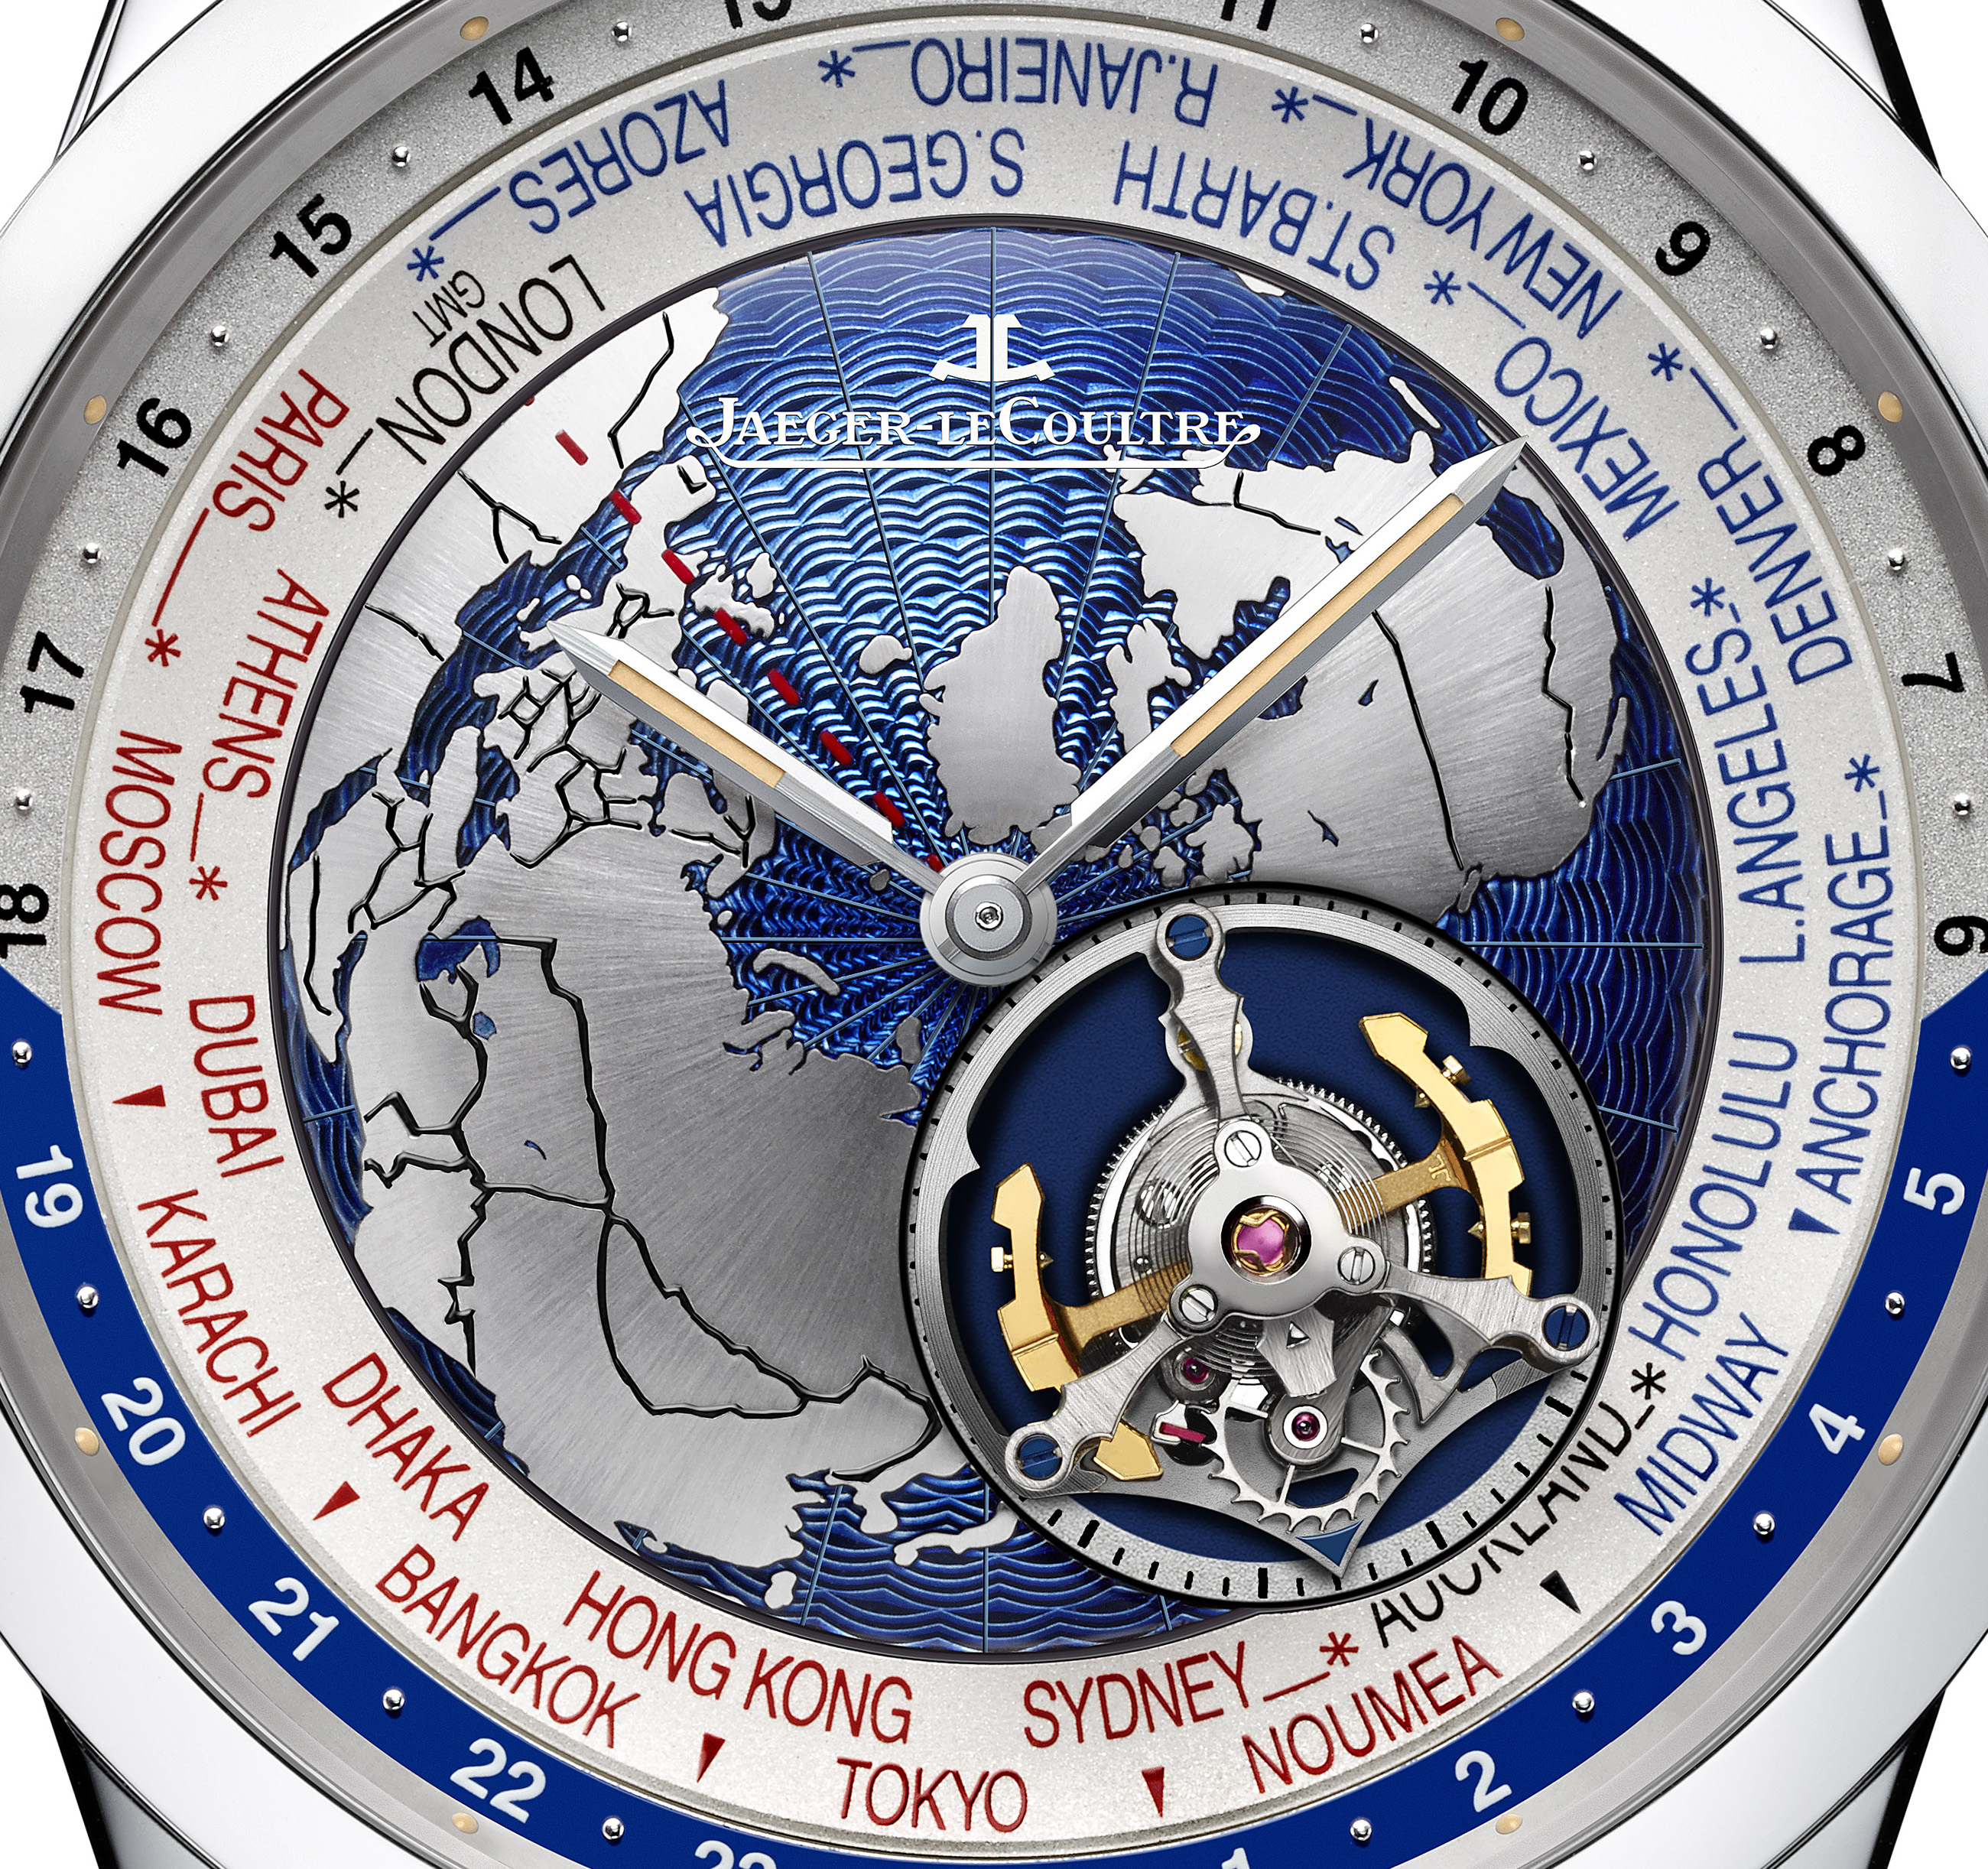 Jaeger-LeCoultre Geophysic Tourbillon Universal Time_close-up dial copy.jpg